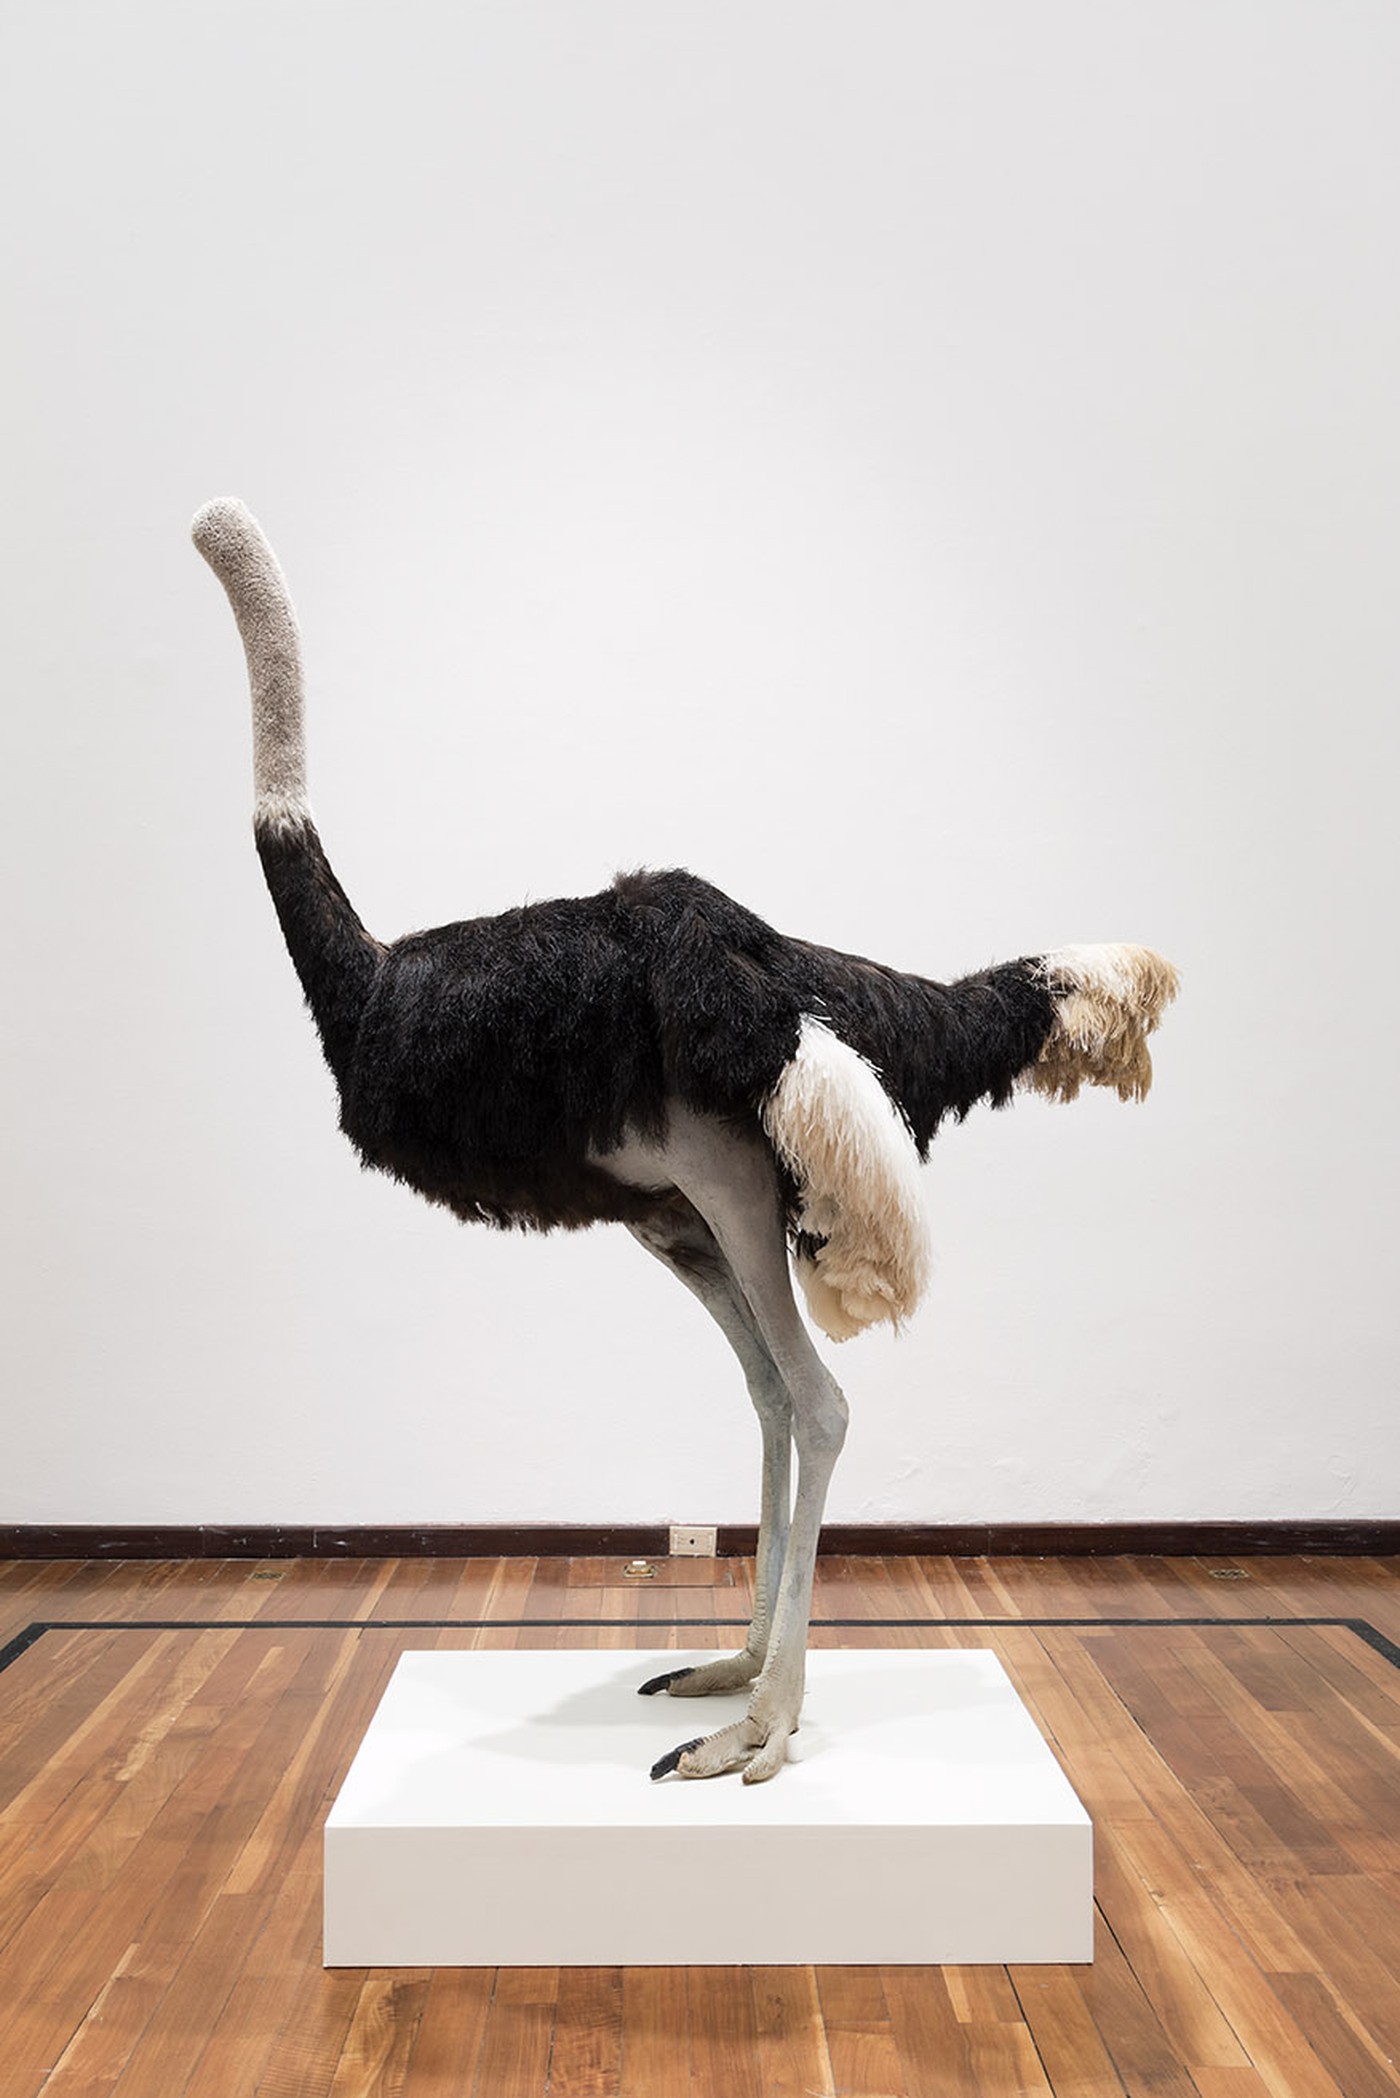 David Shrigley: Lose Your Mind. Ostrich, 2009 at Instituto Cultural Cabañas, Guadalajara, Mexico, November 2015. © David Shrigley. Courtesy of Instituto Cultural Cabañas and British Council. Photo by Marcos García  